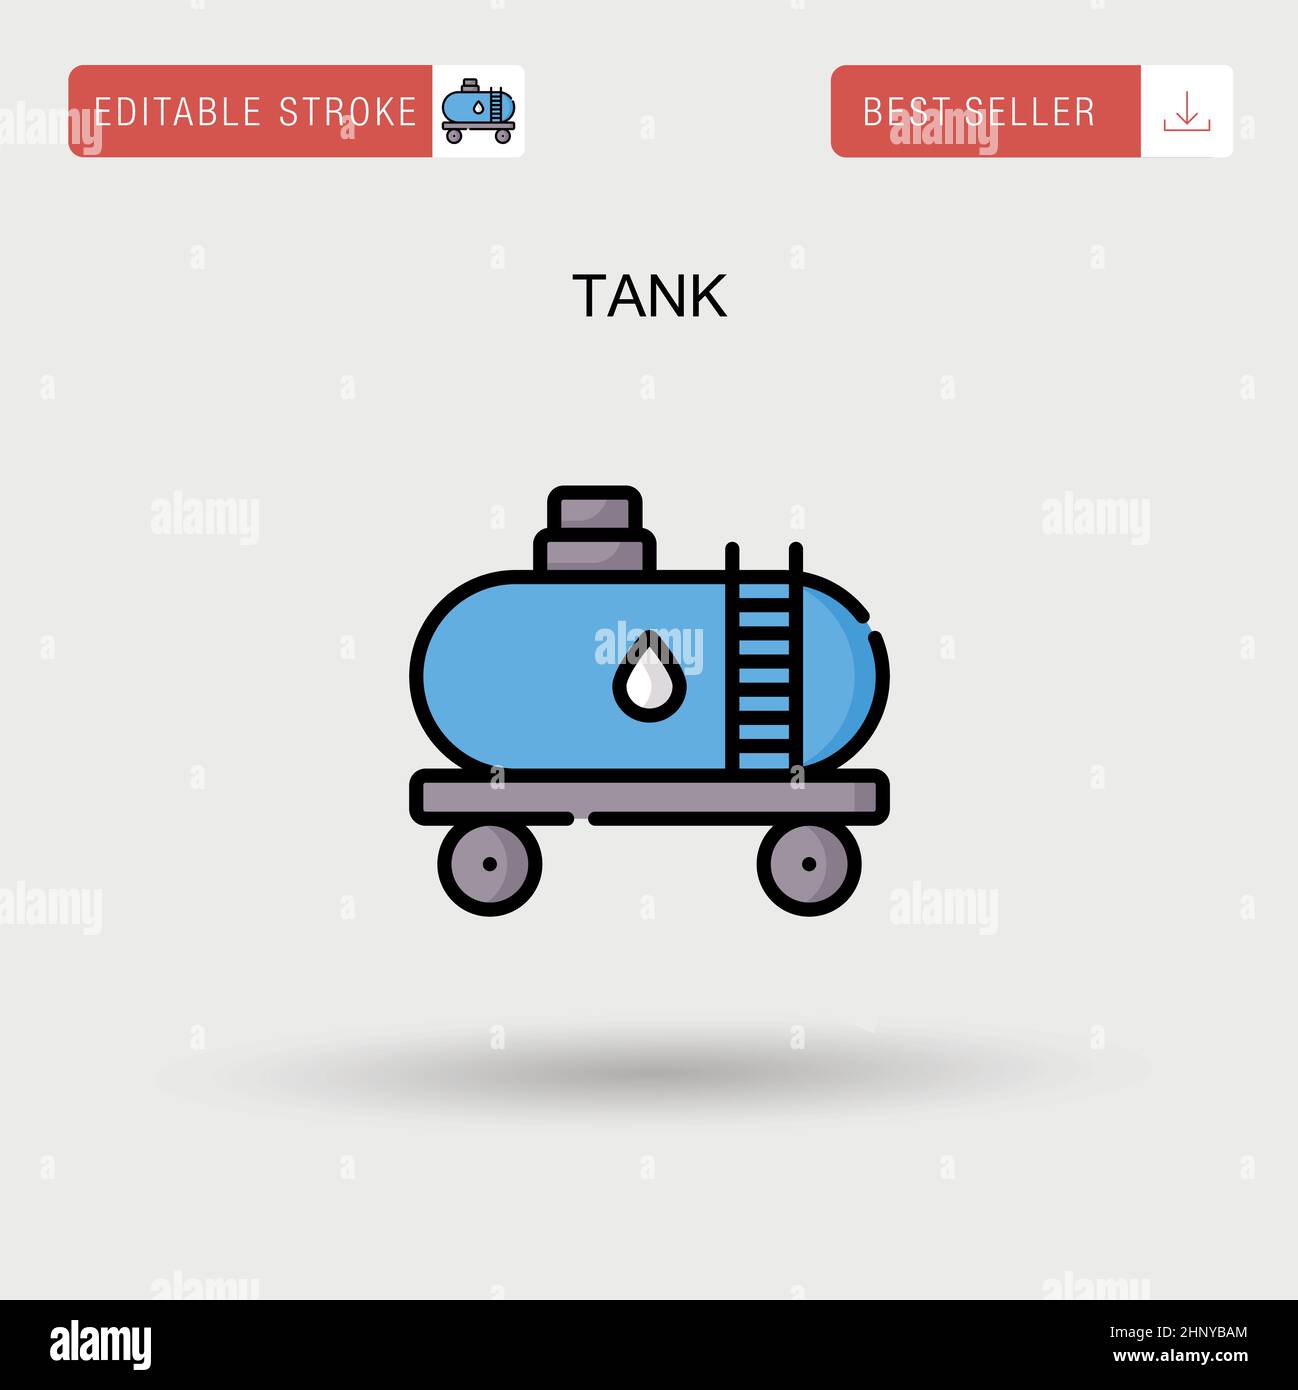 Einfaches Vektorsymbol für den Tank. Stock Vektor